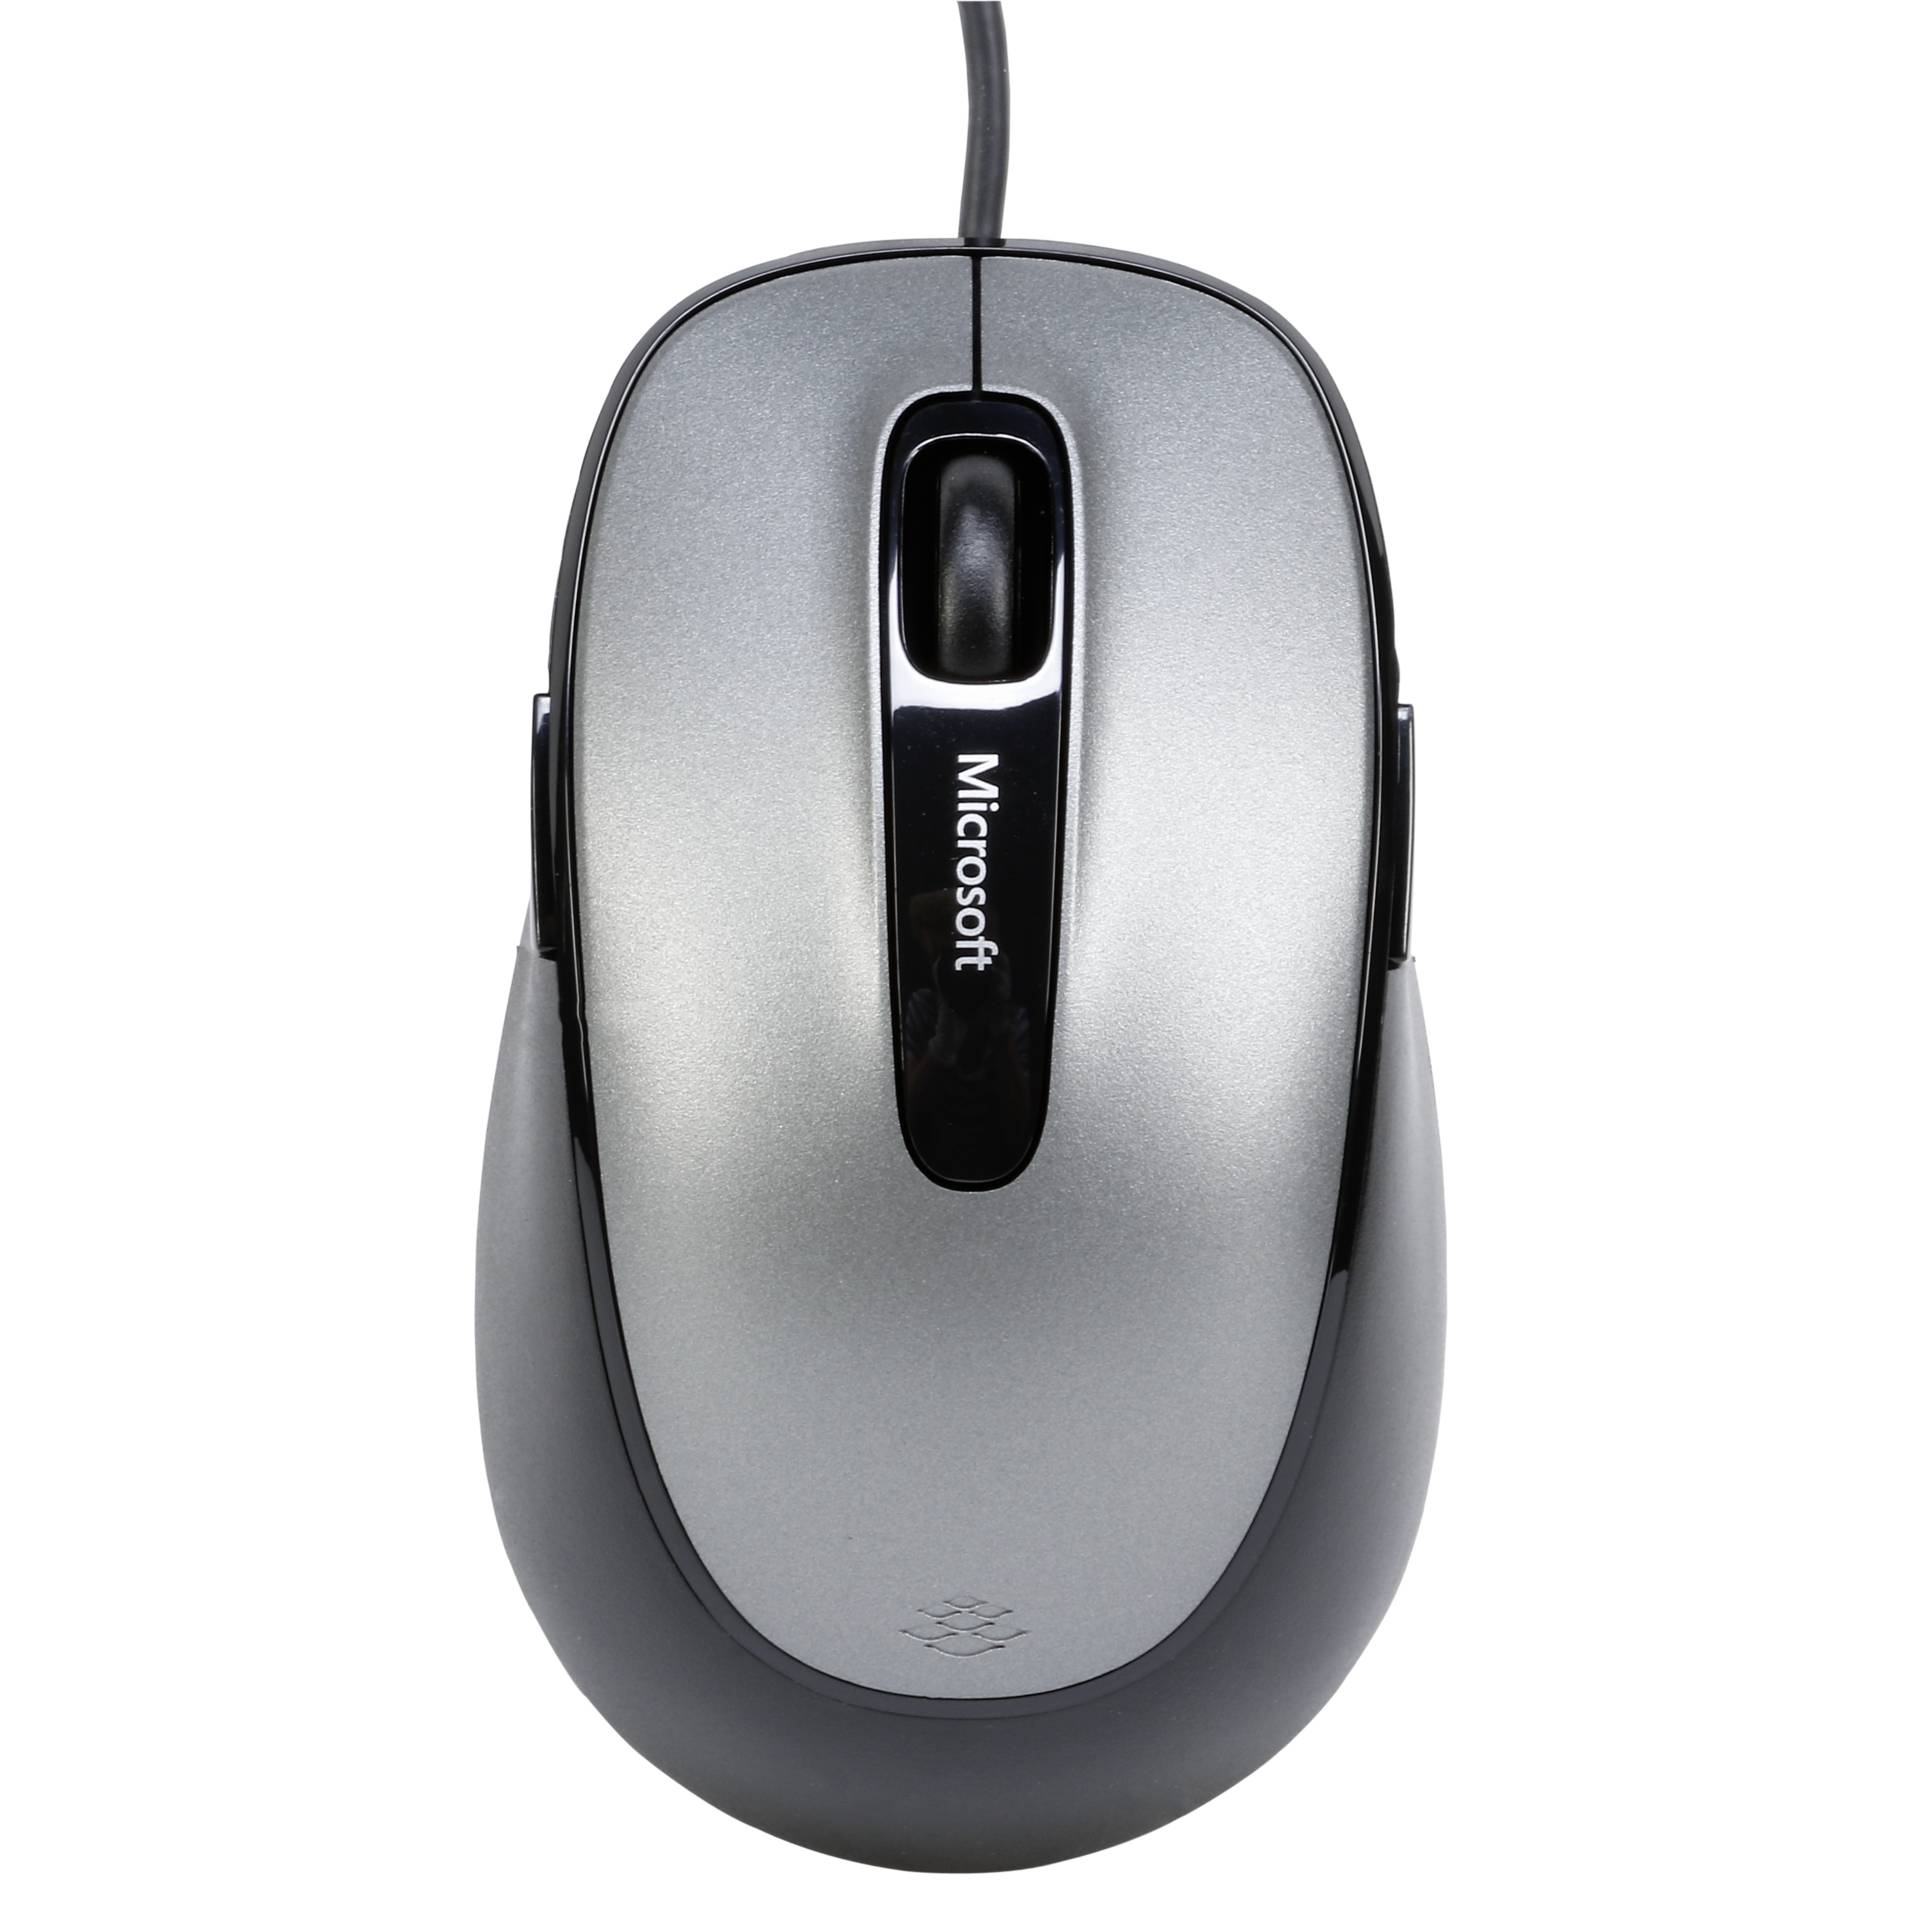 günstig bei Mouse 4500 Microsoft Maus beidhändig Comfort